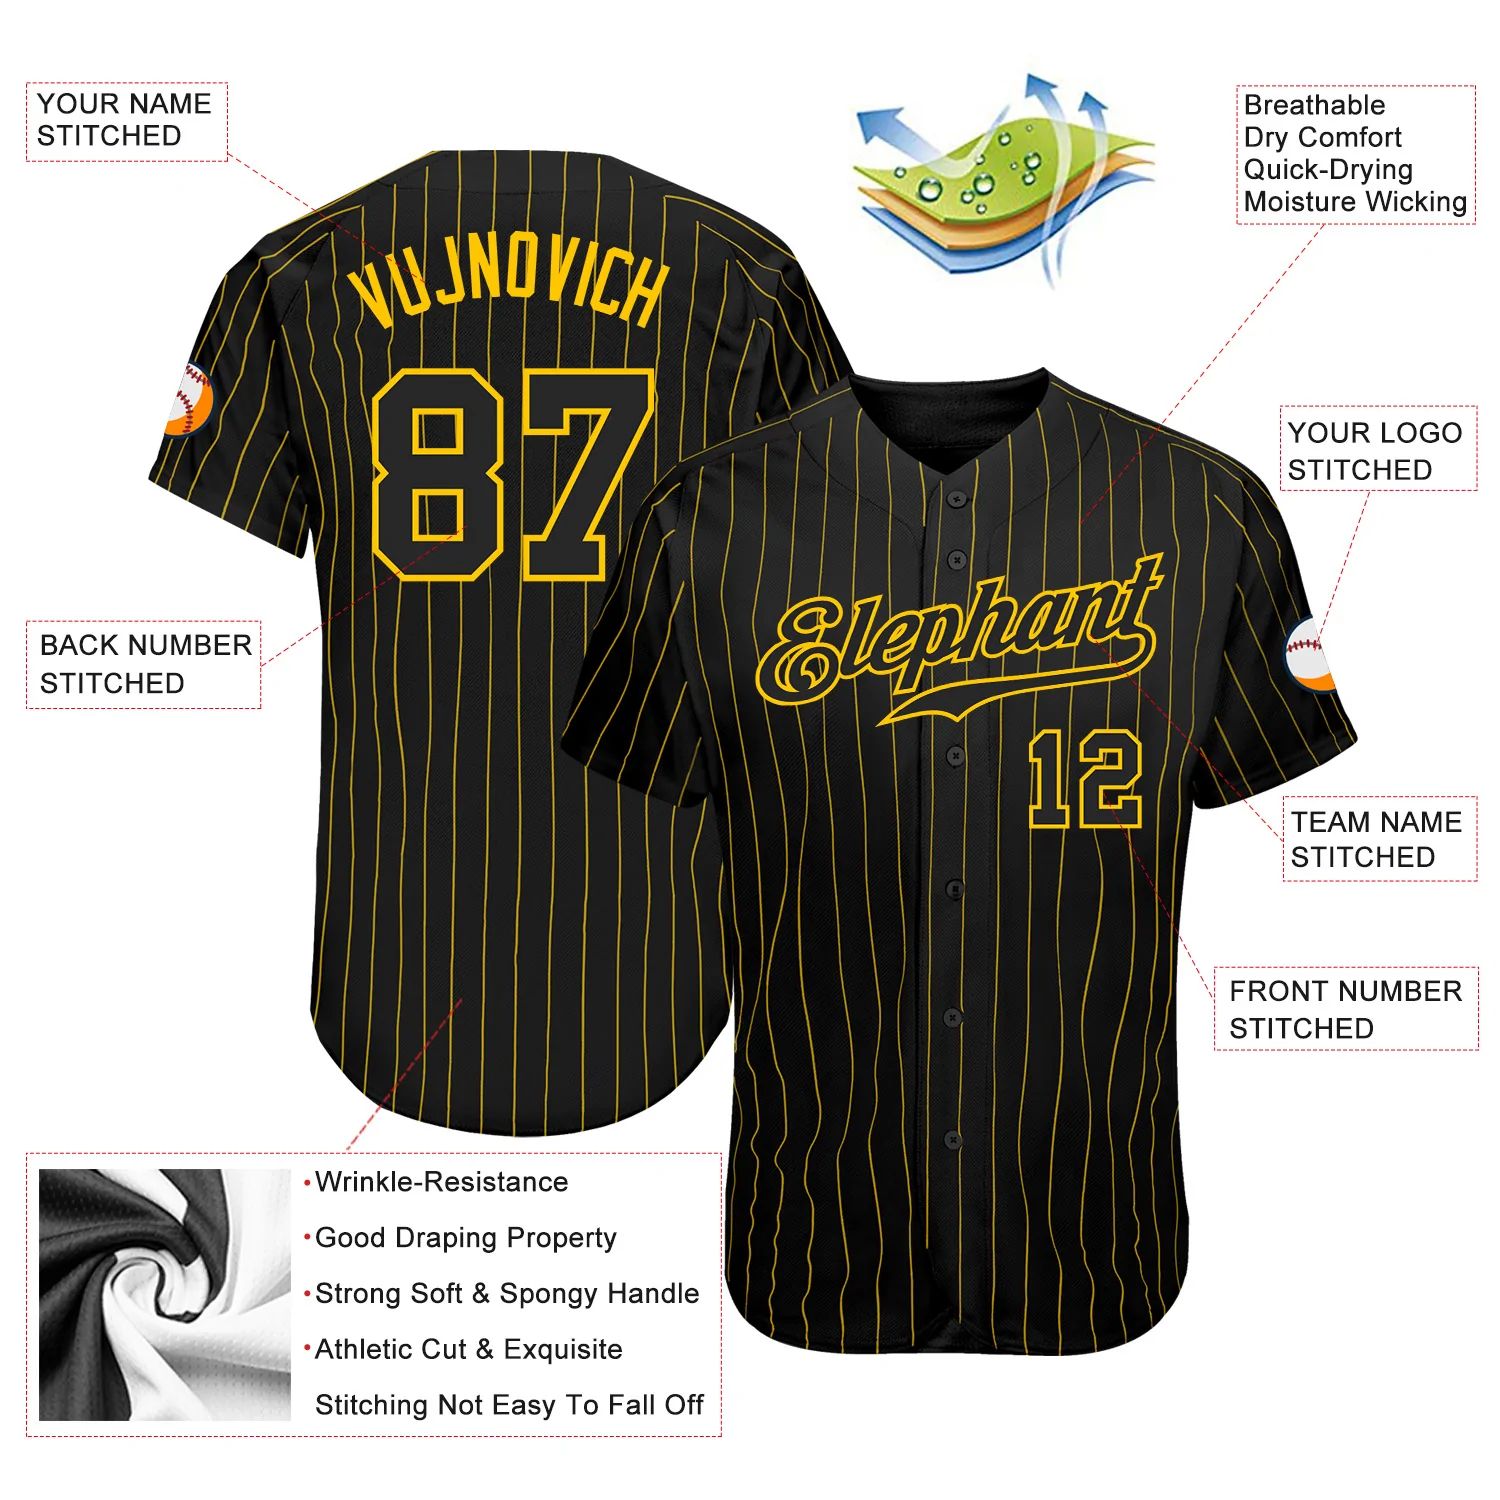 build-gold-black-pinstripe-baseball-black-jersey-authentic-black0443-online-3.jpg